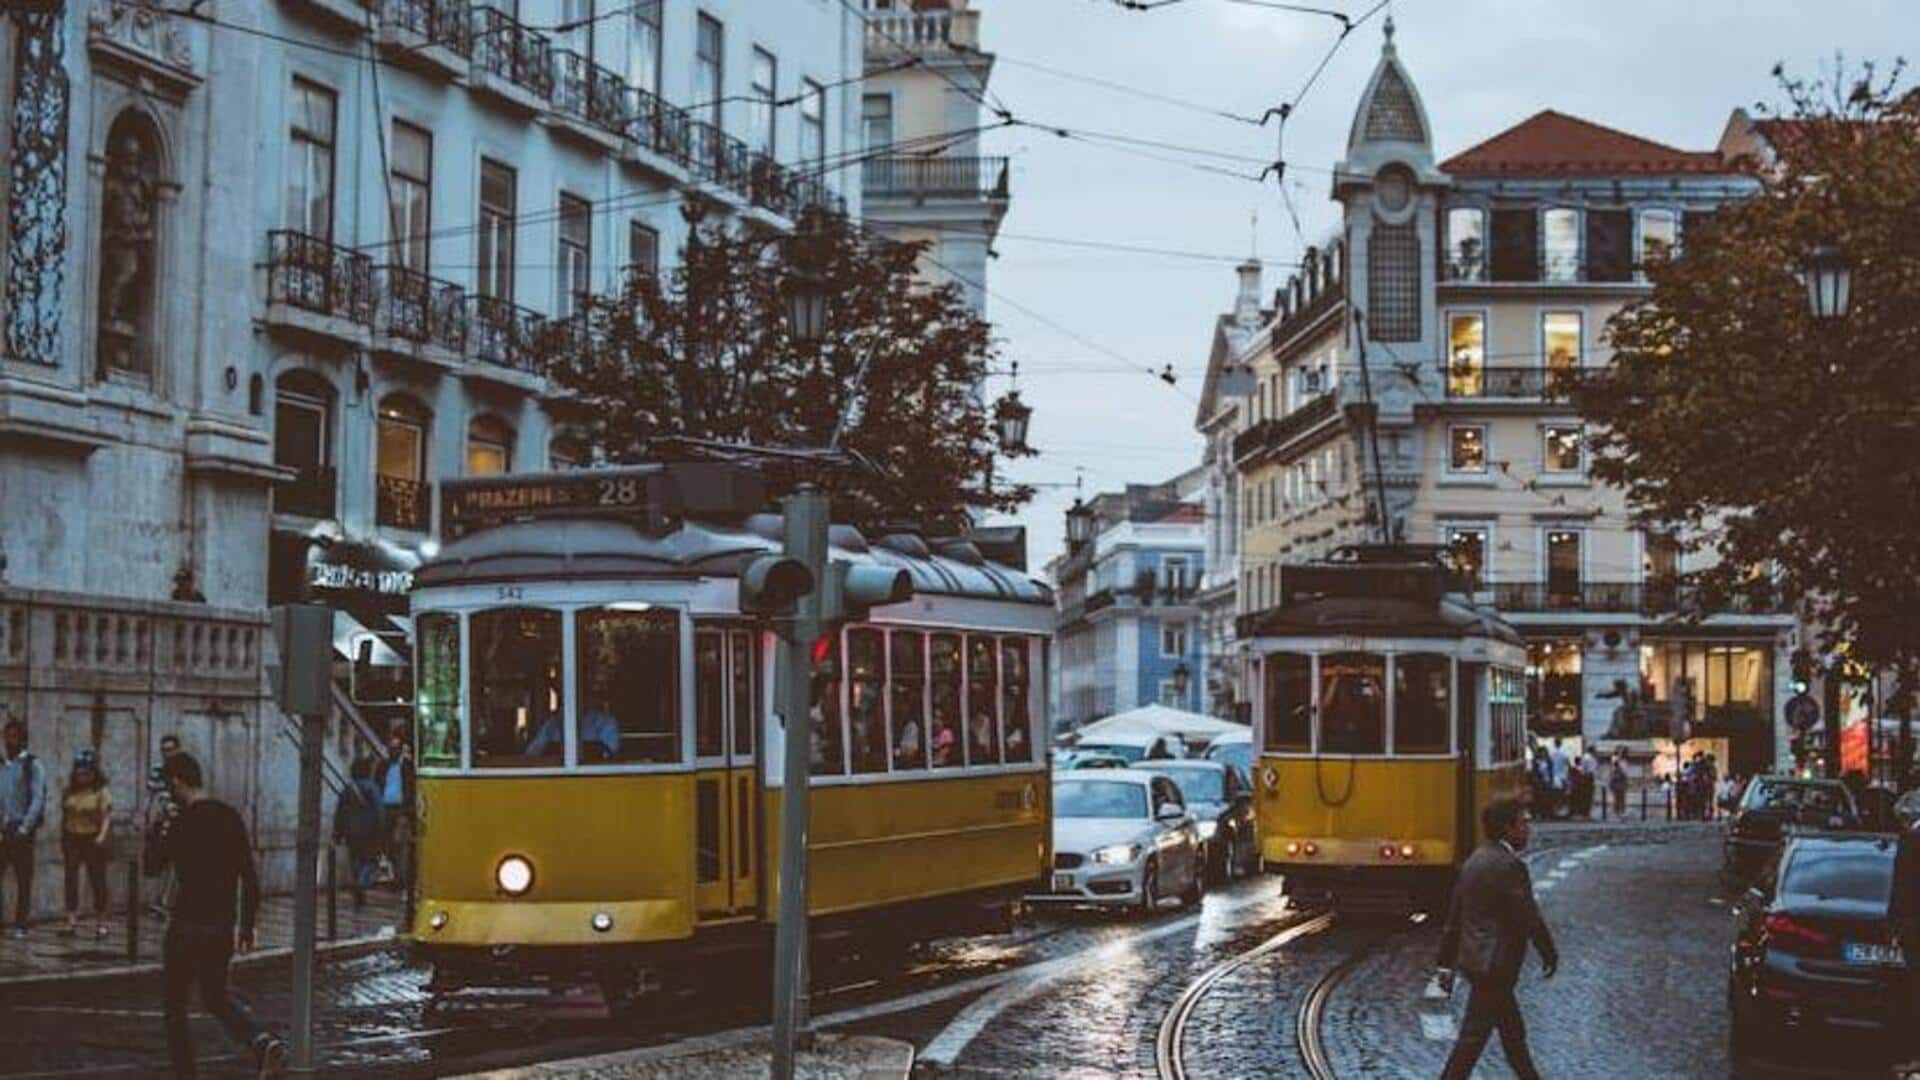 Lisbon's historic tram and fado voyage